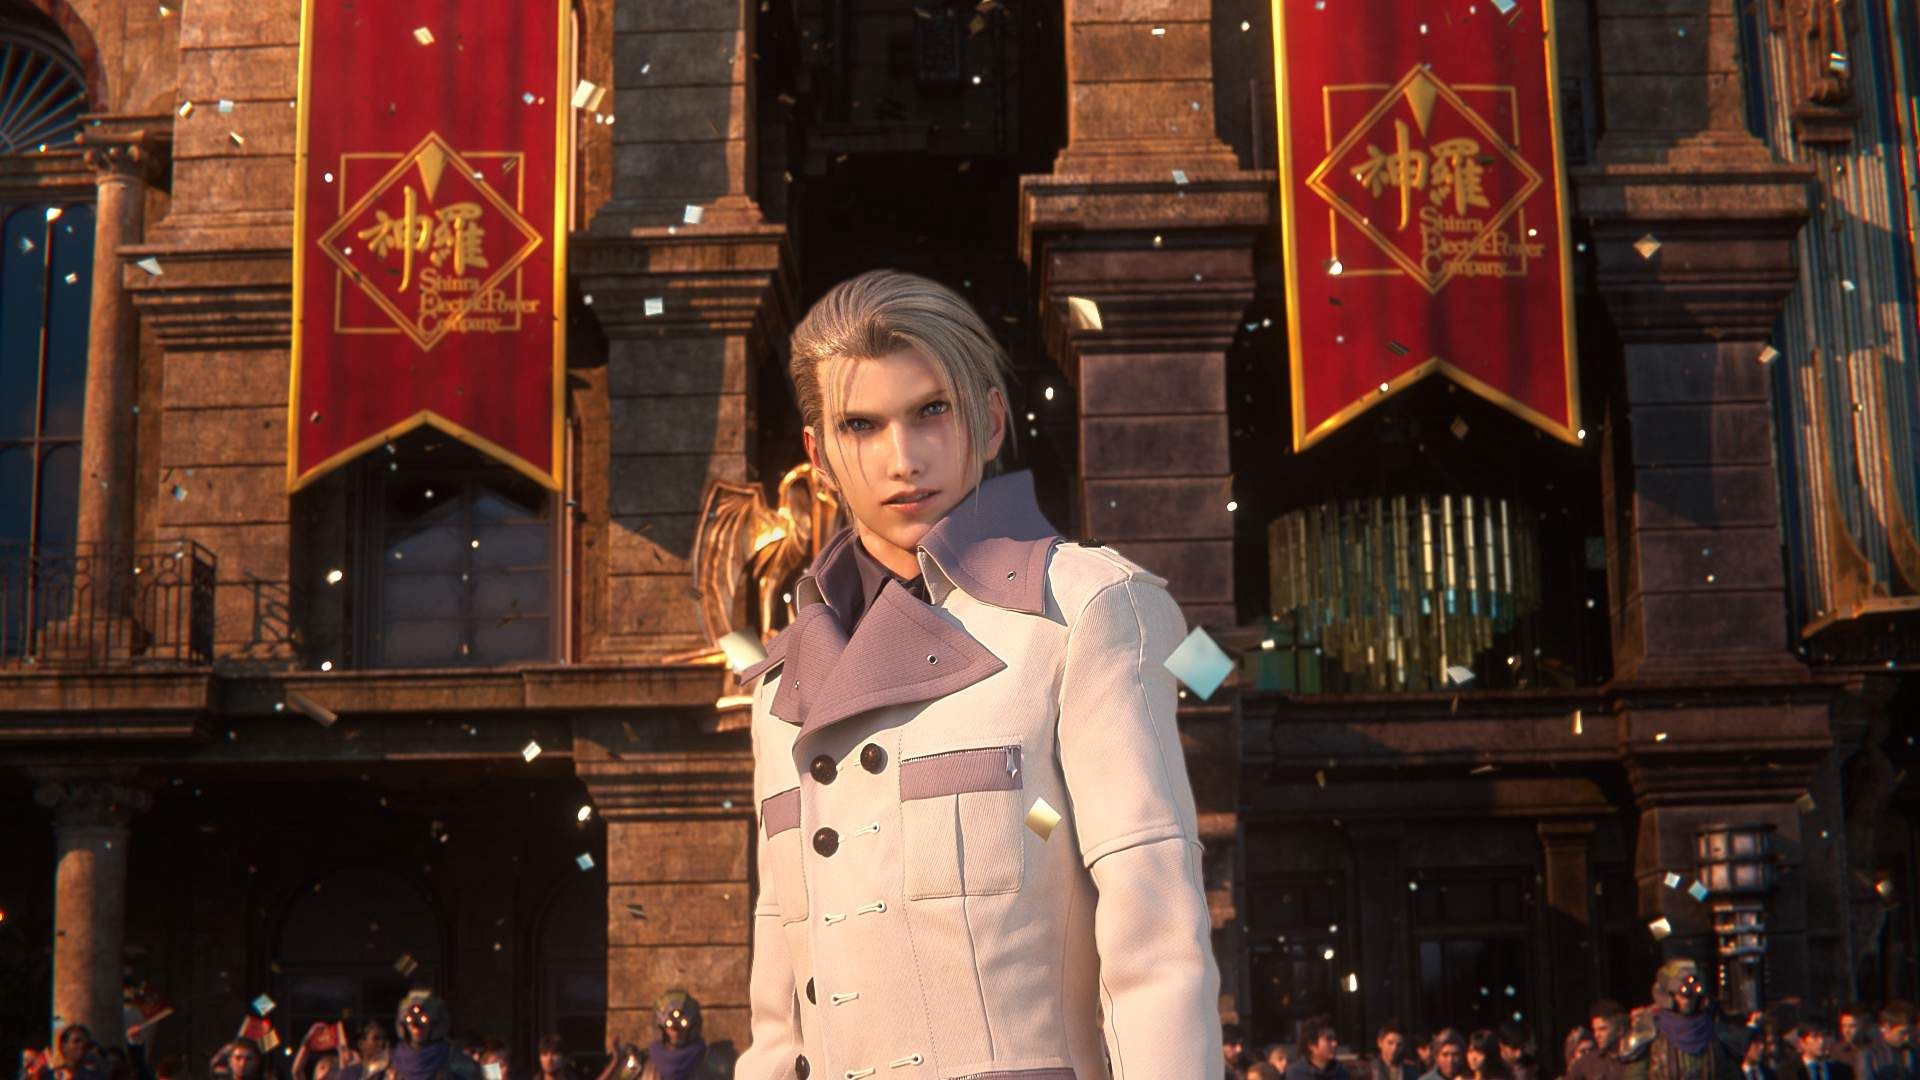 President Rufus Shinra hosts a parade in Upper Junon in Final Fantasy 7 Rebirth